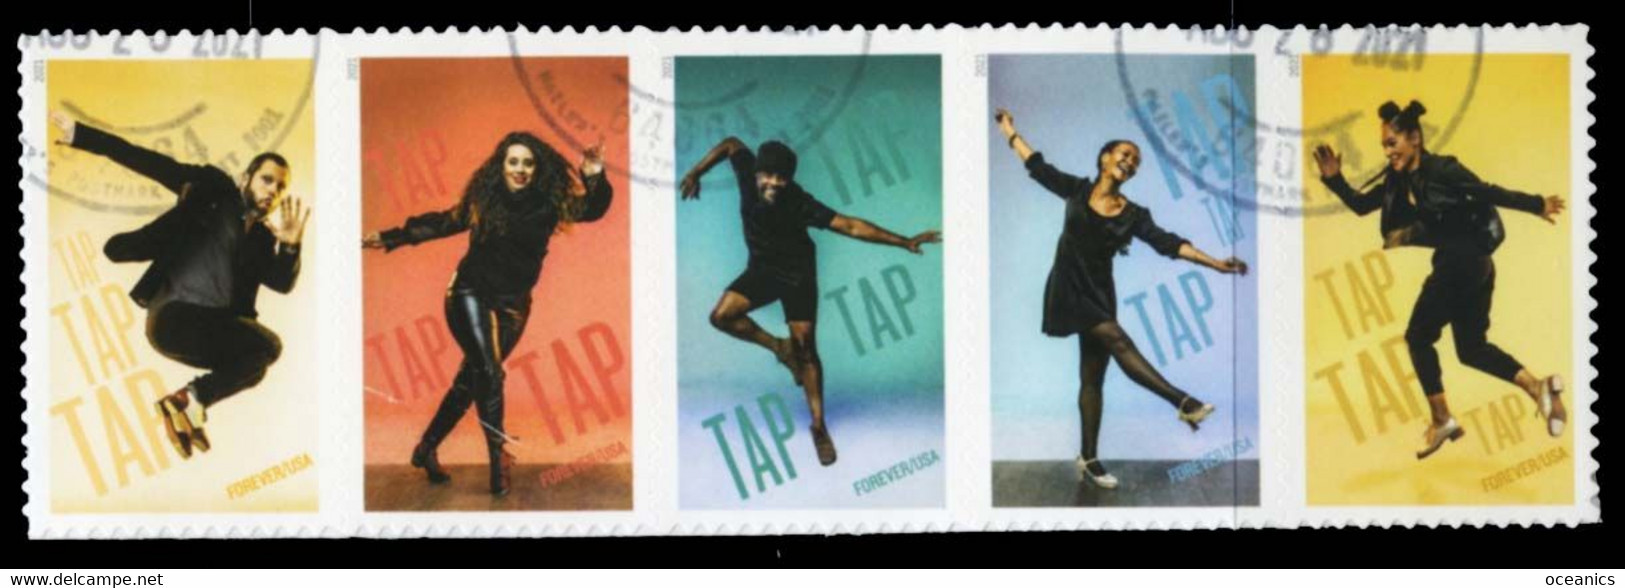 Etats-Unis / United States (Scott No.5613a - Tap Dance) (o) Strip - Used Stamps